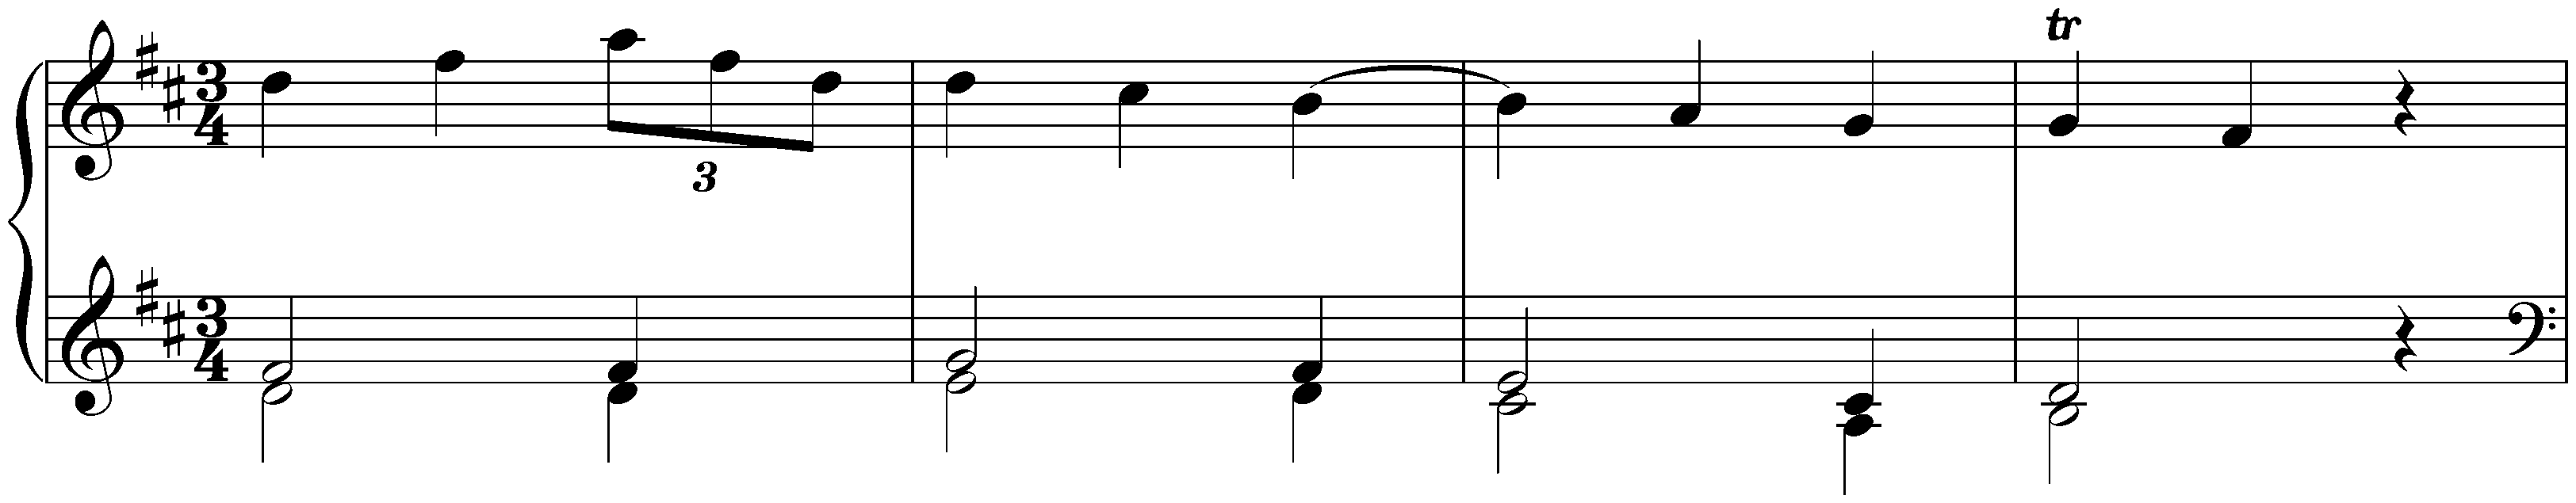 Sonata in D major, Hob. XVI:4; 2. Menuet – Trio